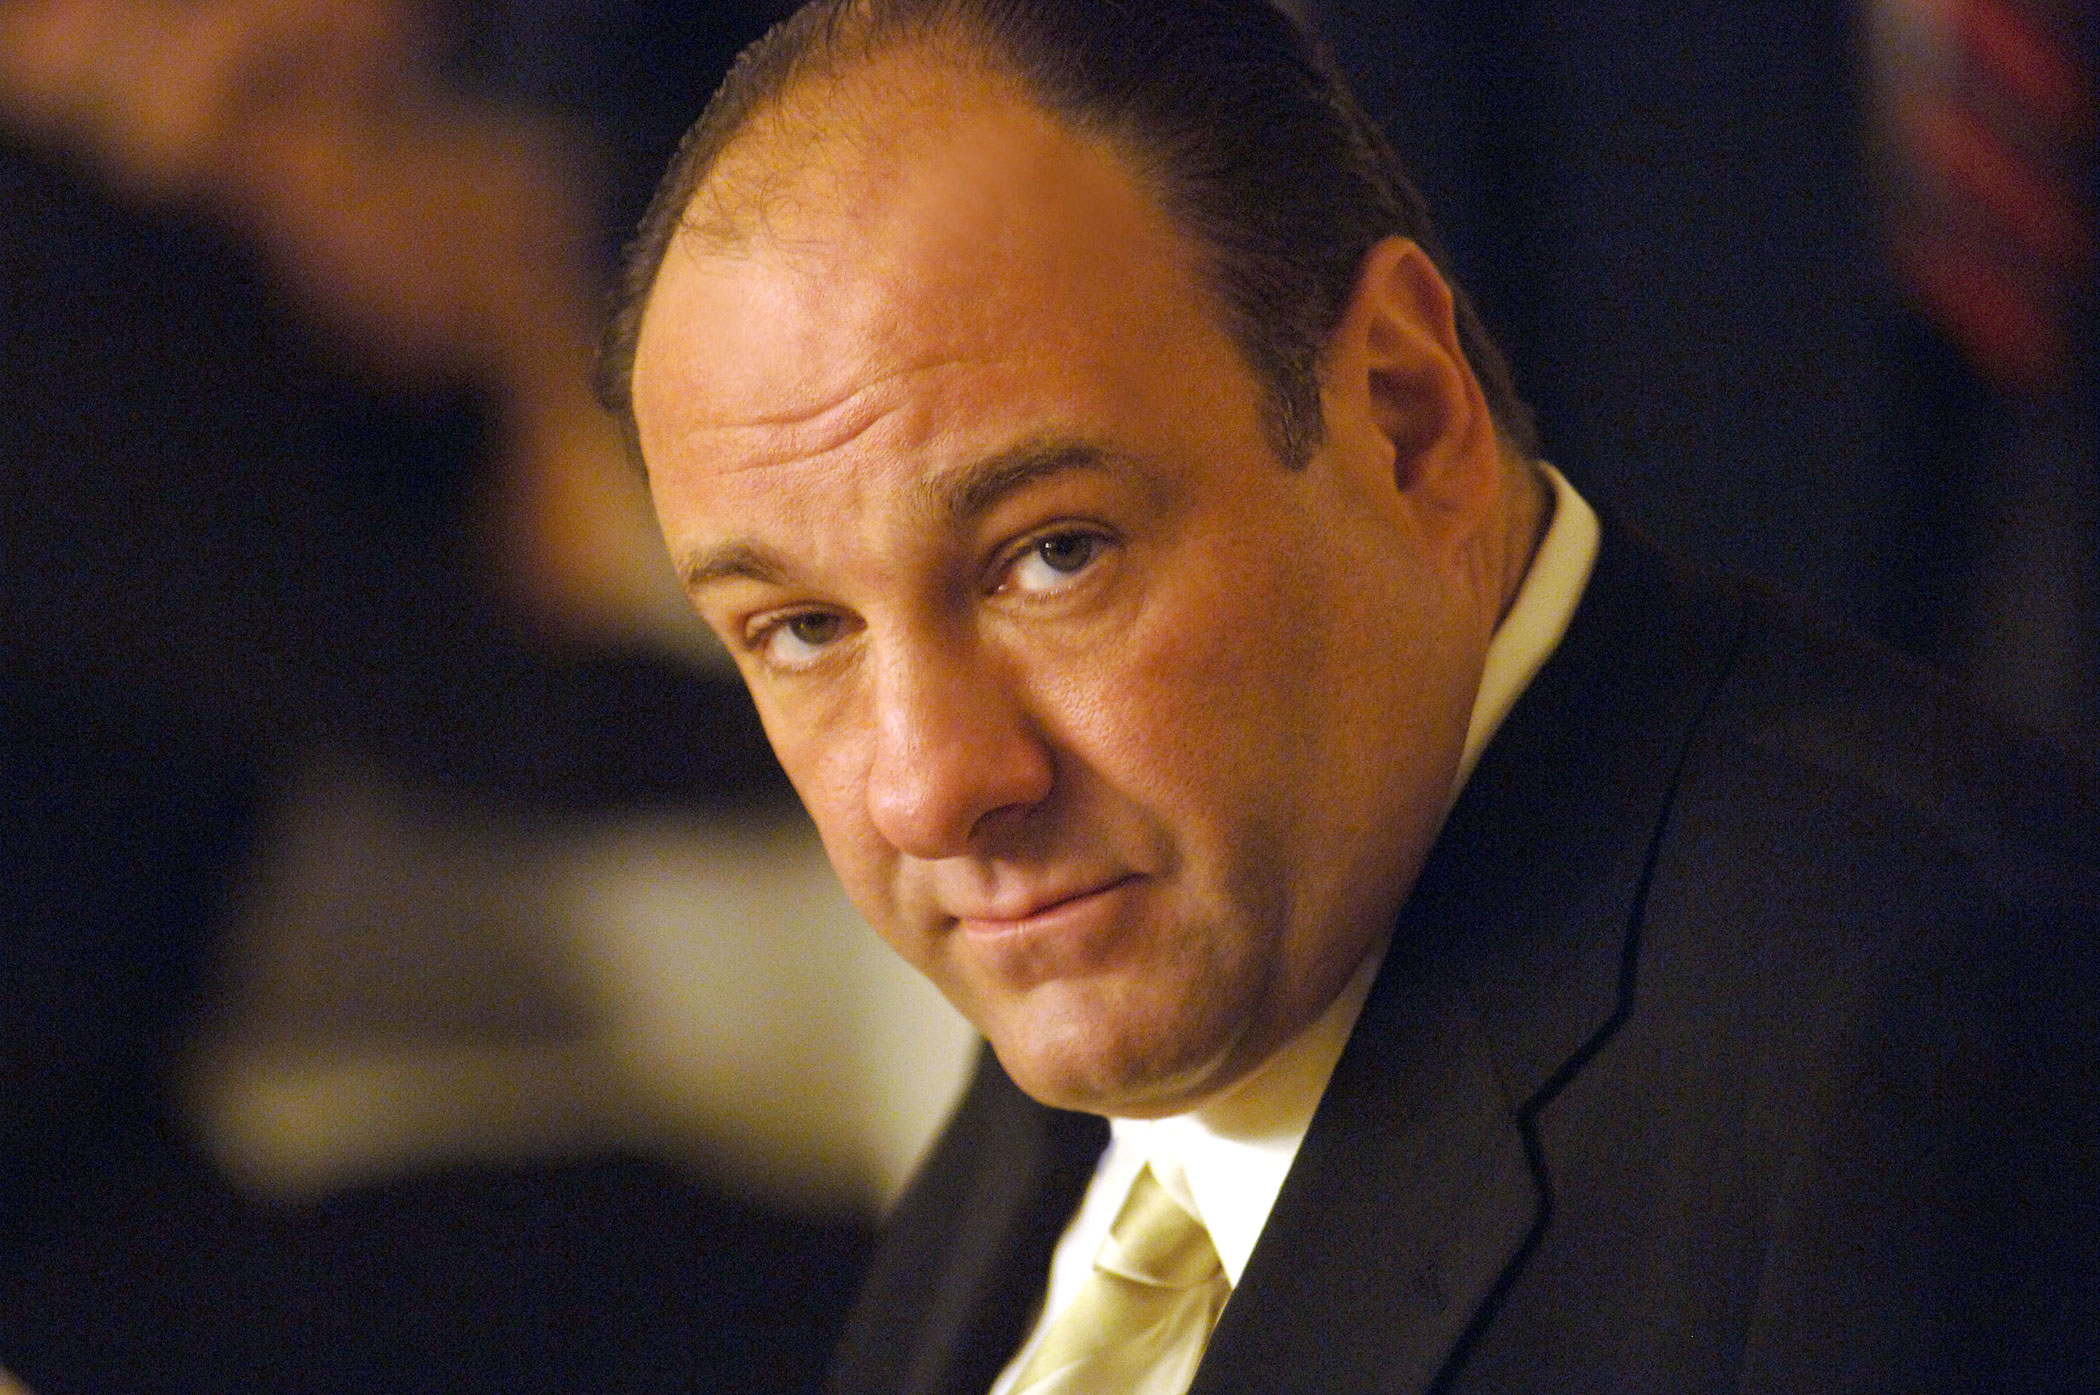 In perhaps his most famous role, Gandolfini portrayed mob boss Tony Soprano in HBO's <i>The Sopranos</i>. (HBO)